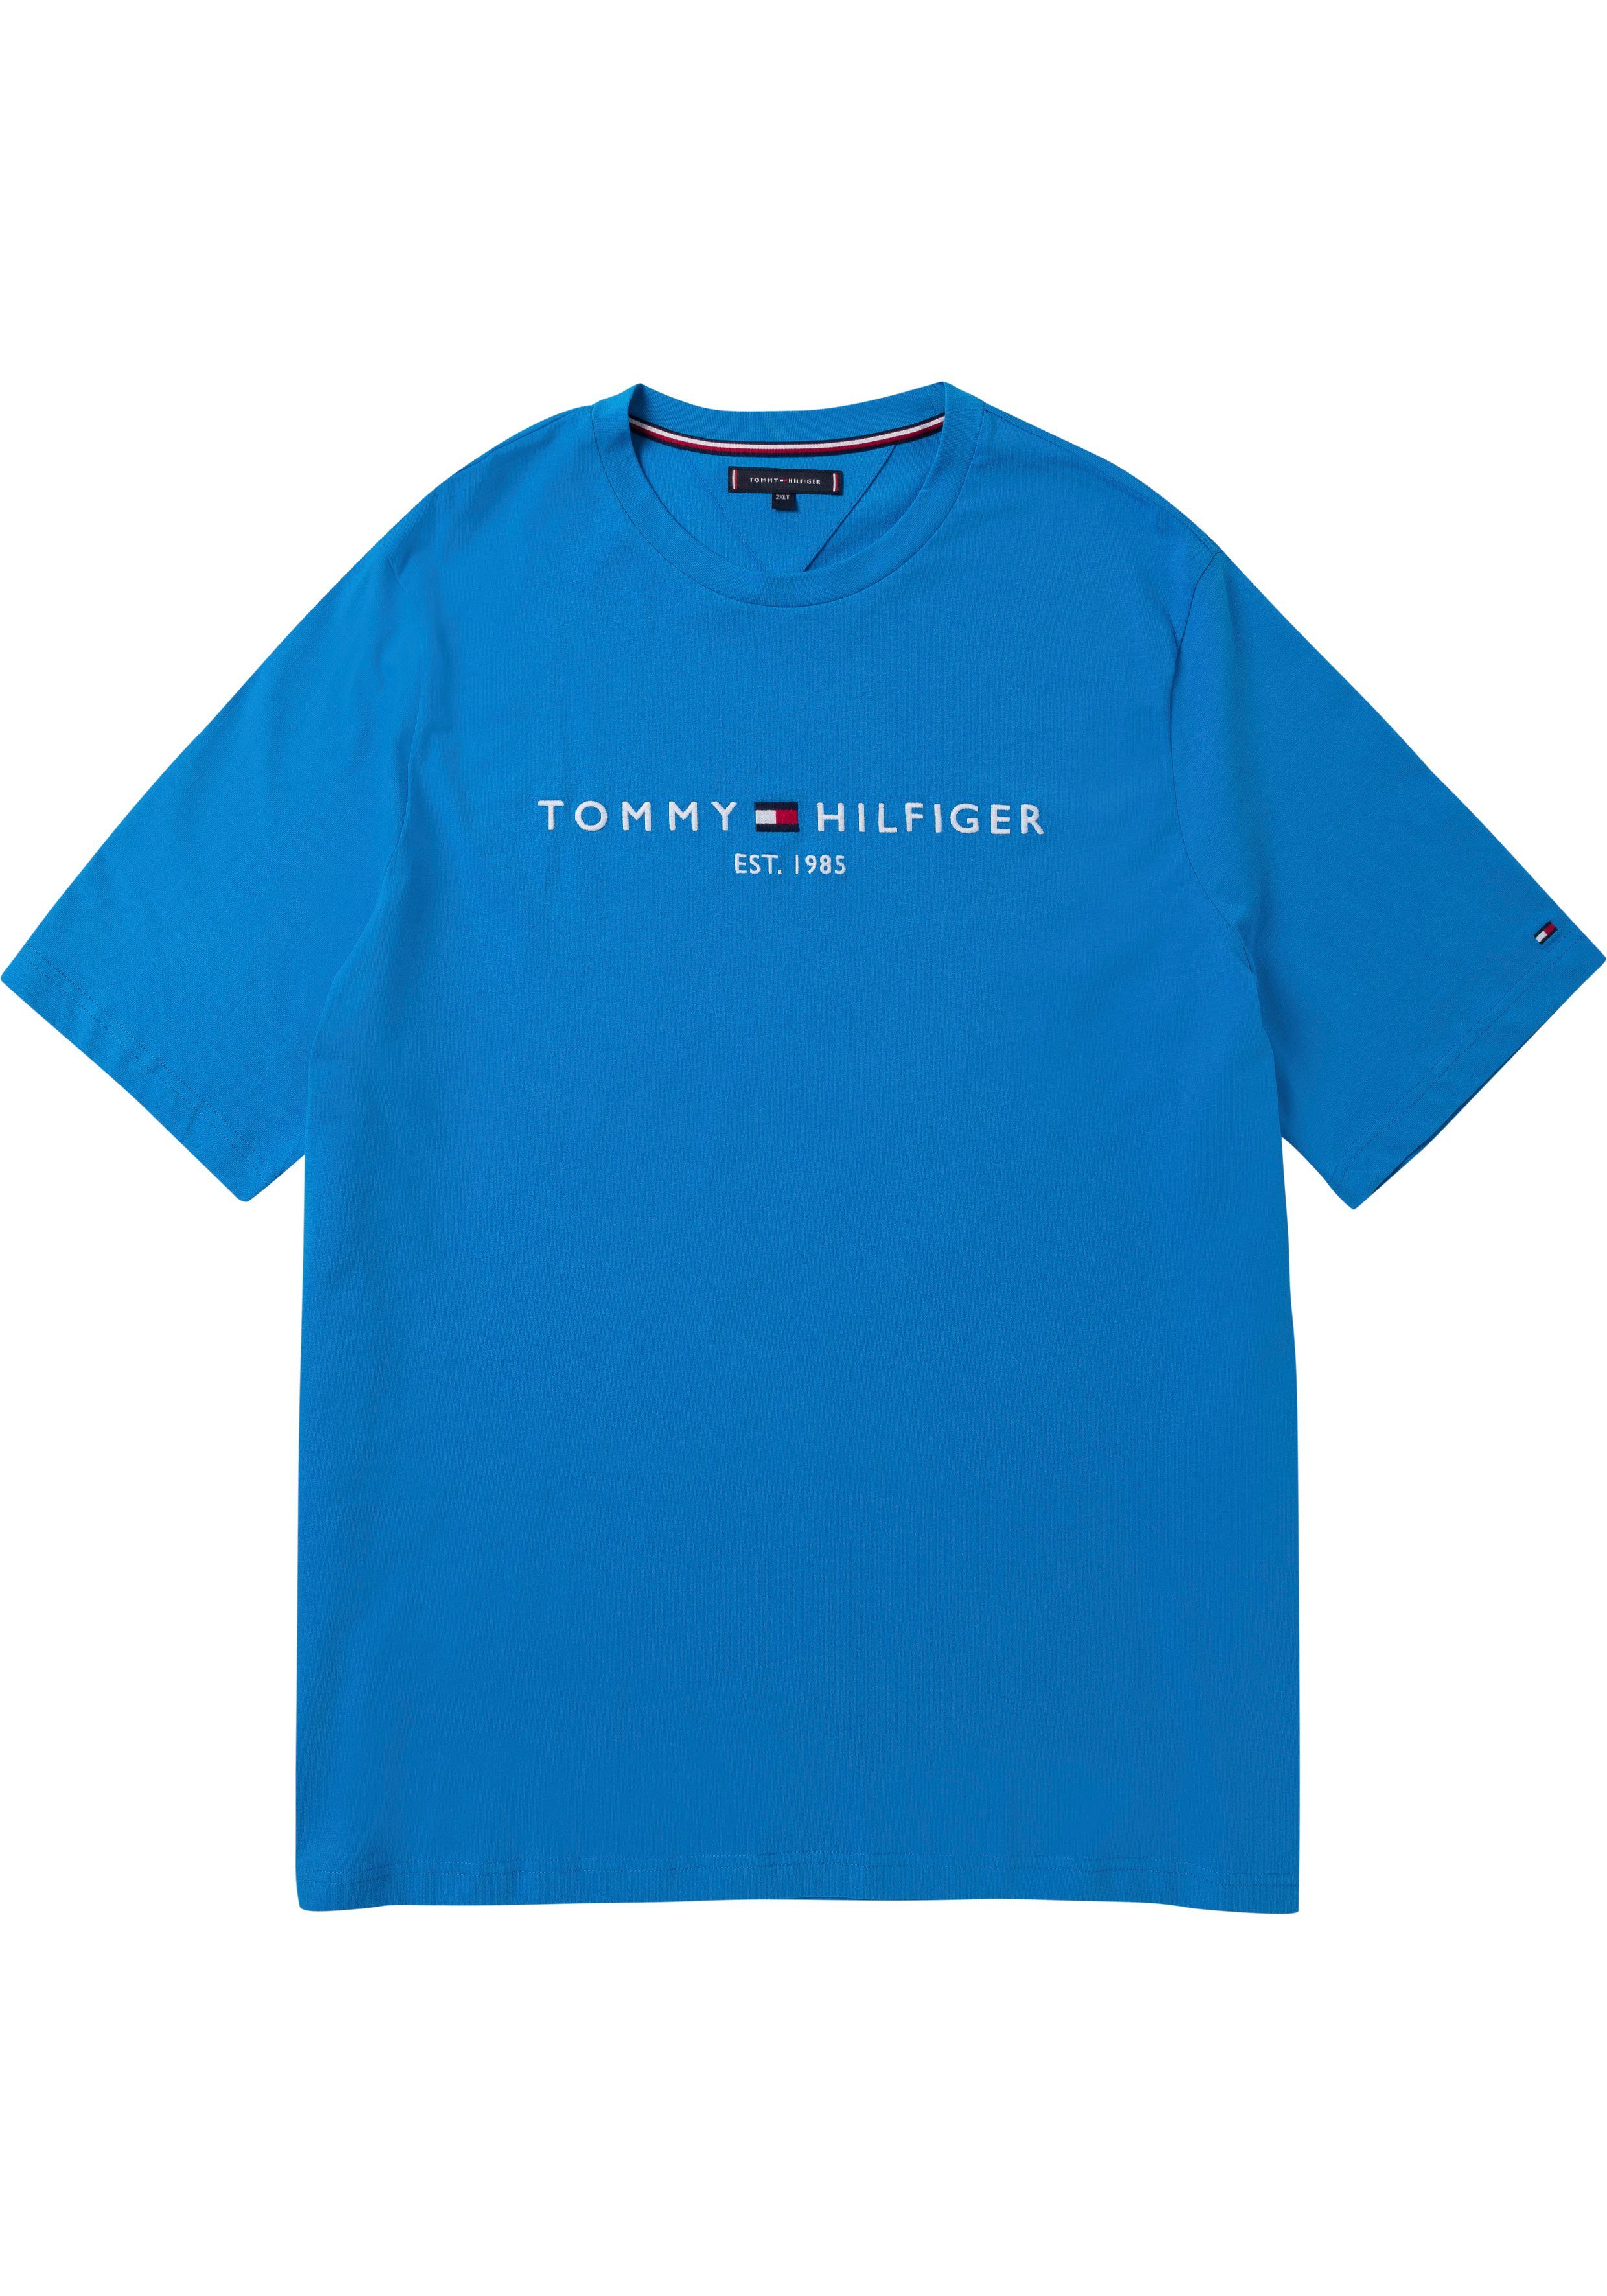 Hilfiger Hilfiger Tommy Brust azurblau Tommy auf & der Logoschriftzug mit Tall Big BT-TOMMY TEE-B T-Shirt LOGO